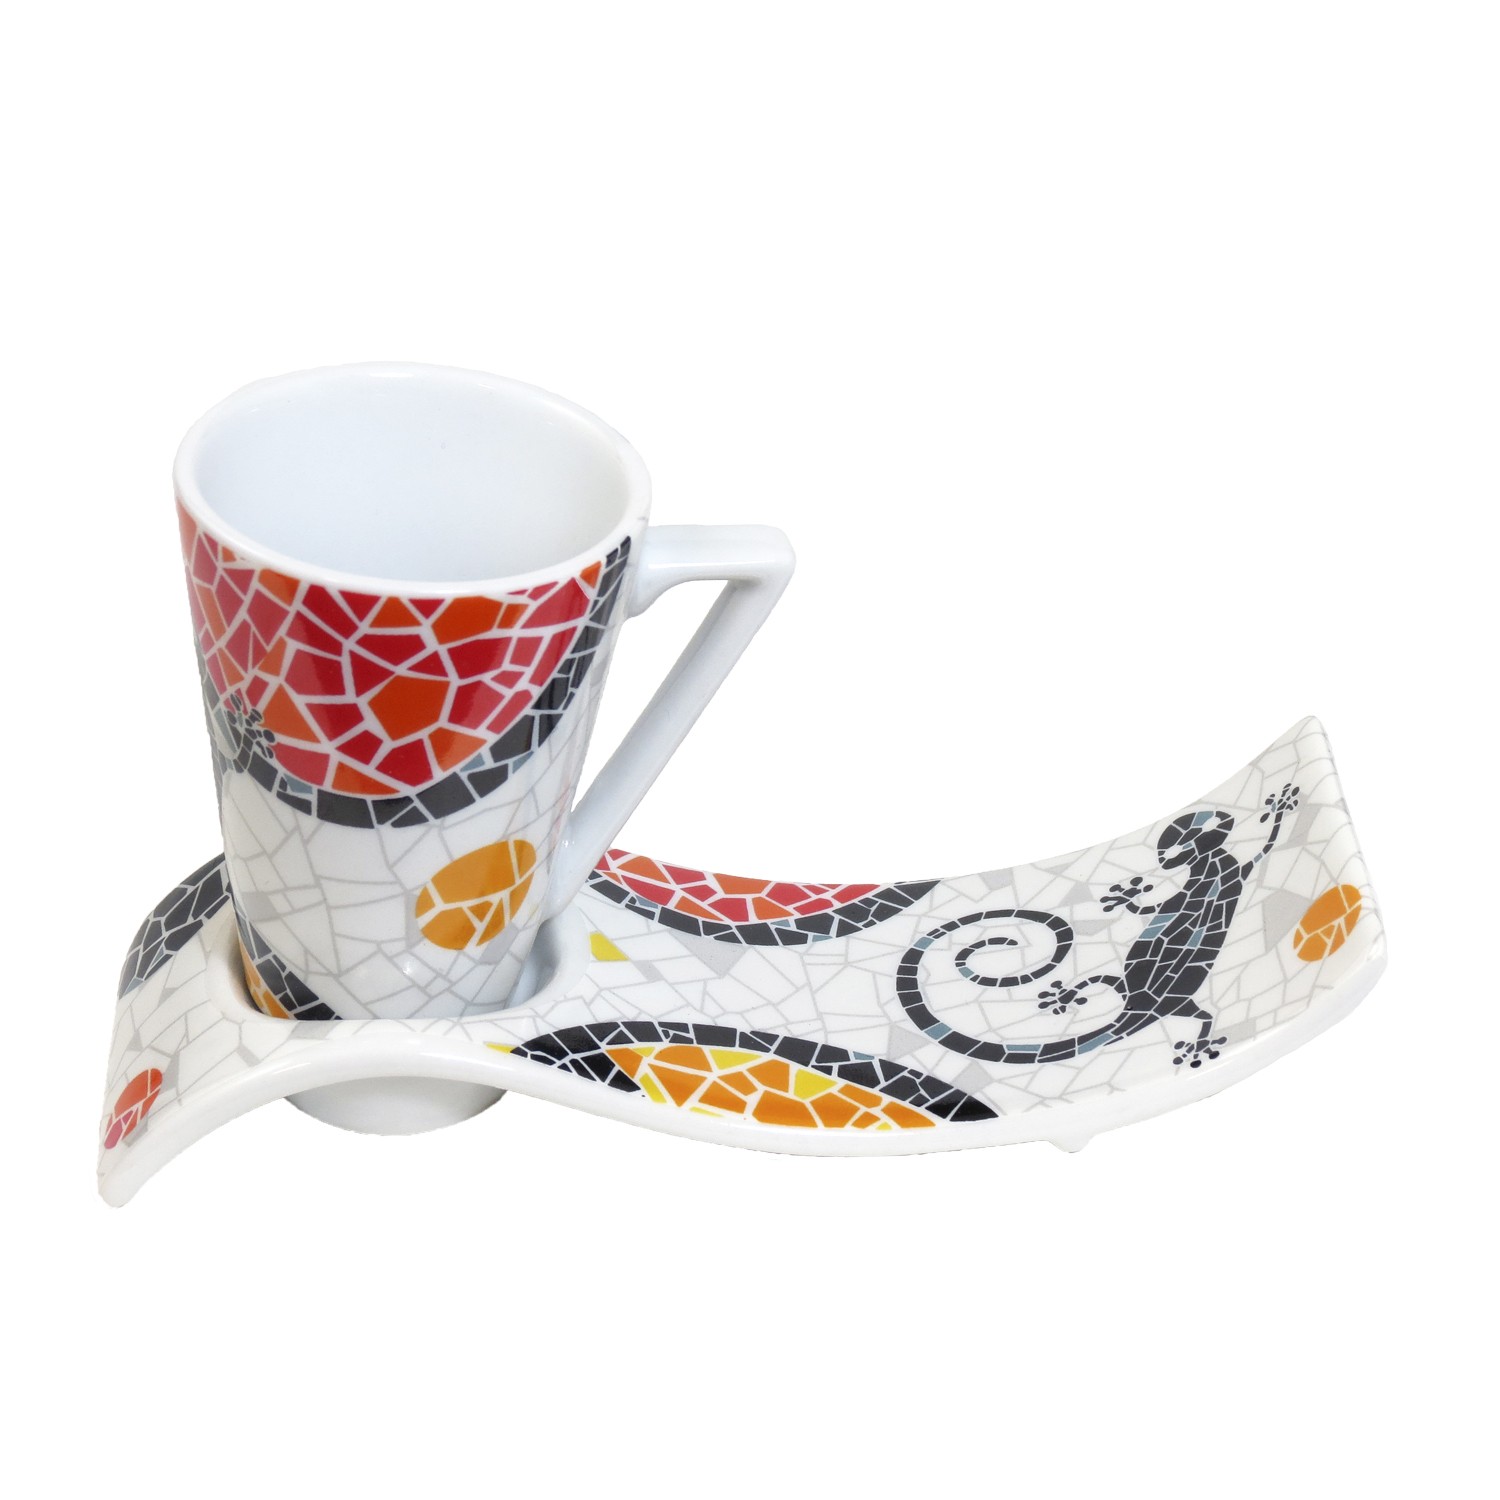 Taza para desayuno porcelana decorado mosaico laratija trencadis